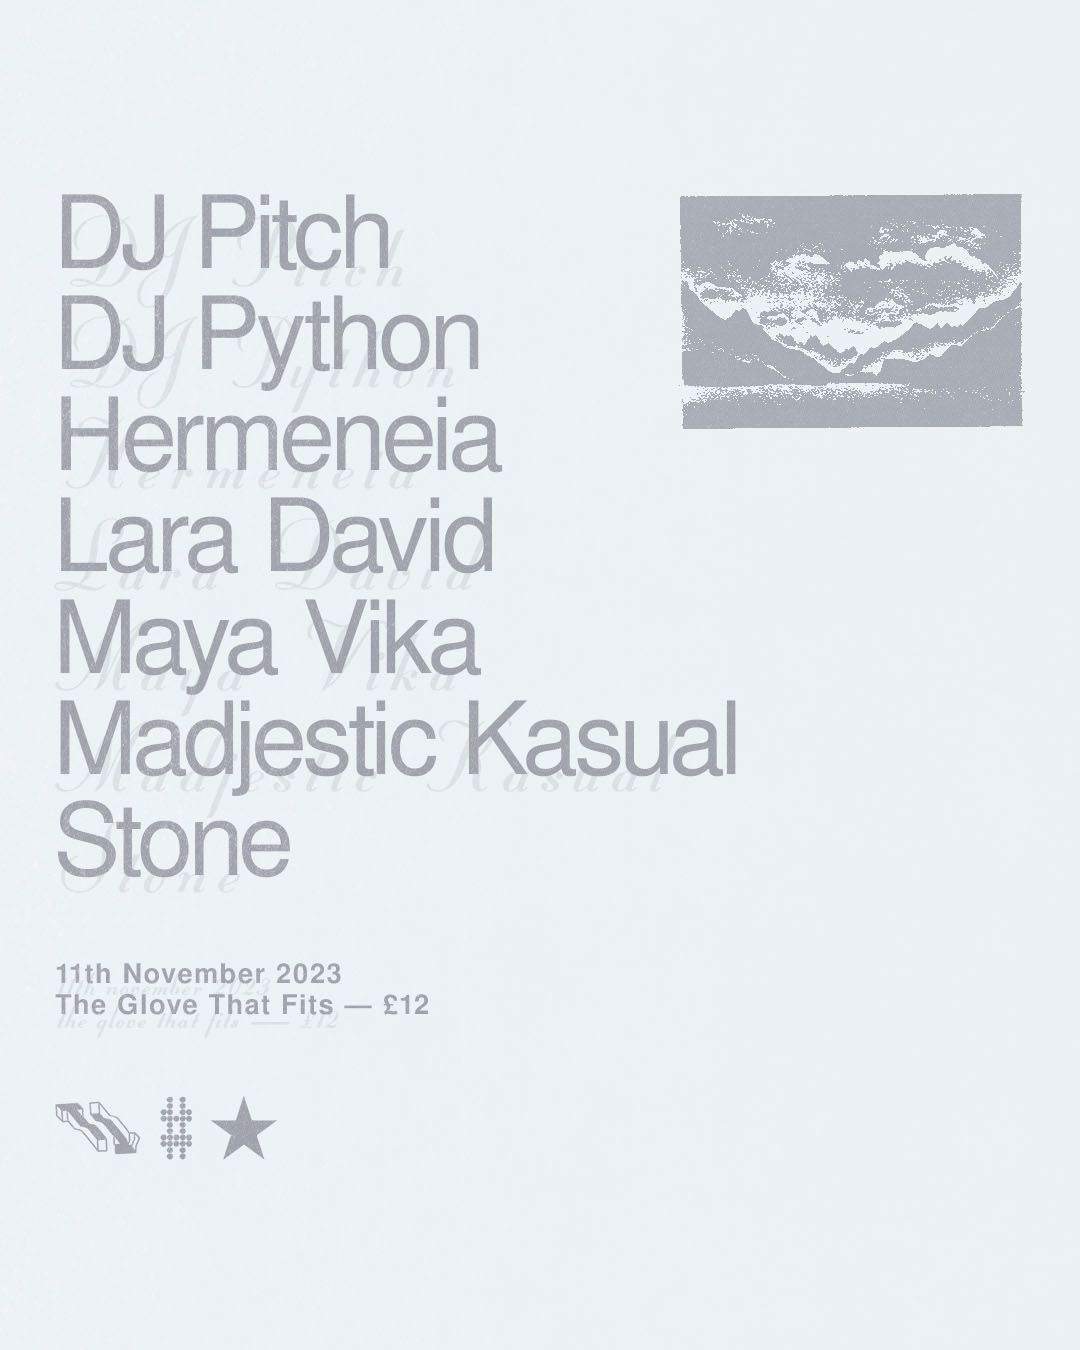 TT with DJ Pitch, DJ Python Hermeneia, Lara David, Madjestic Kasual, Maya Vika, Stone - フライヤー表